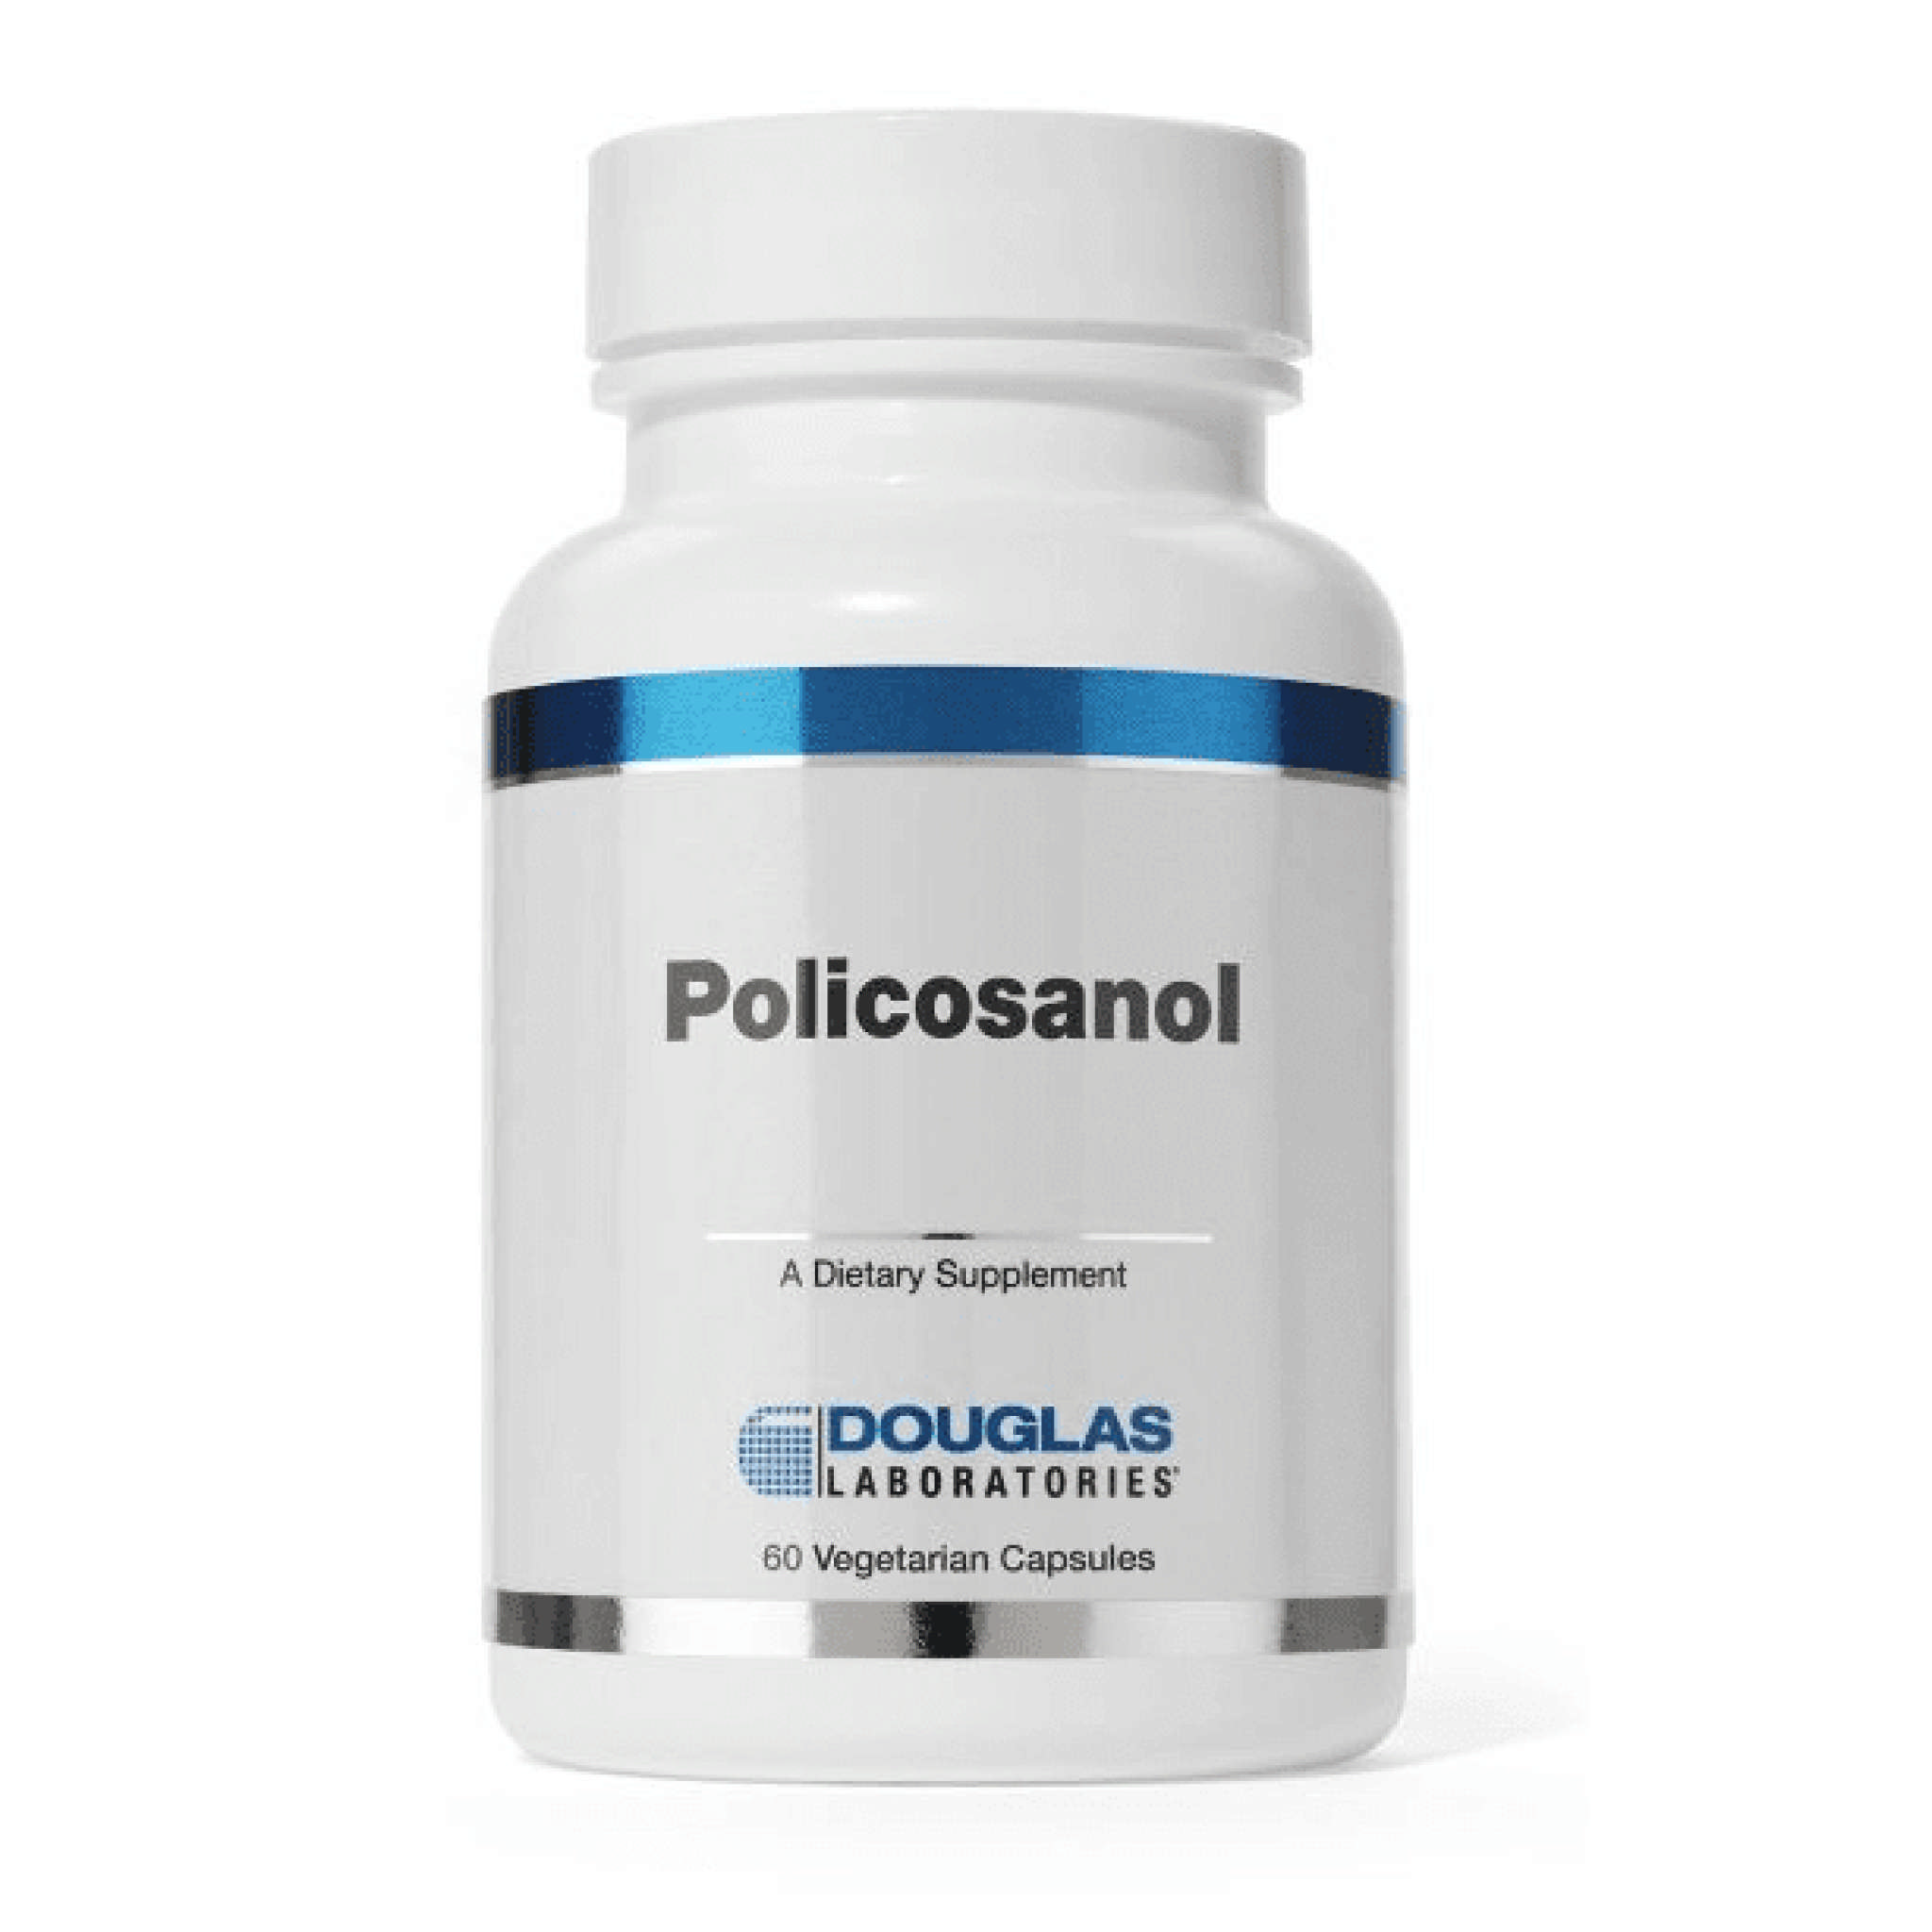 Douglas Laboratories - Policosanol